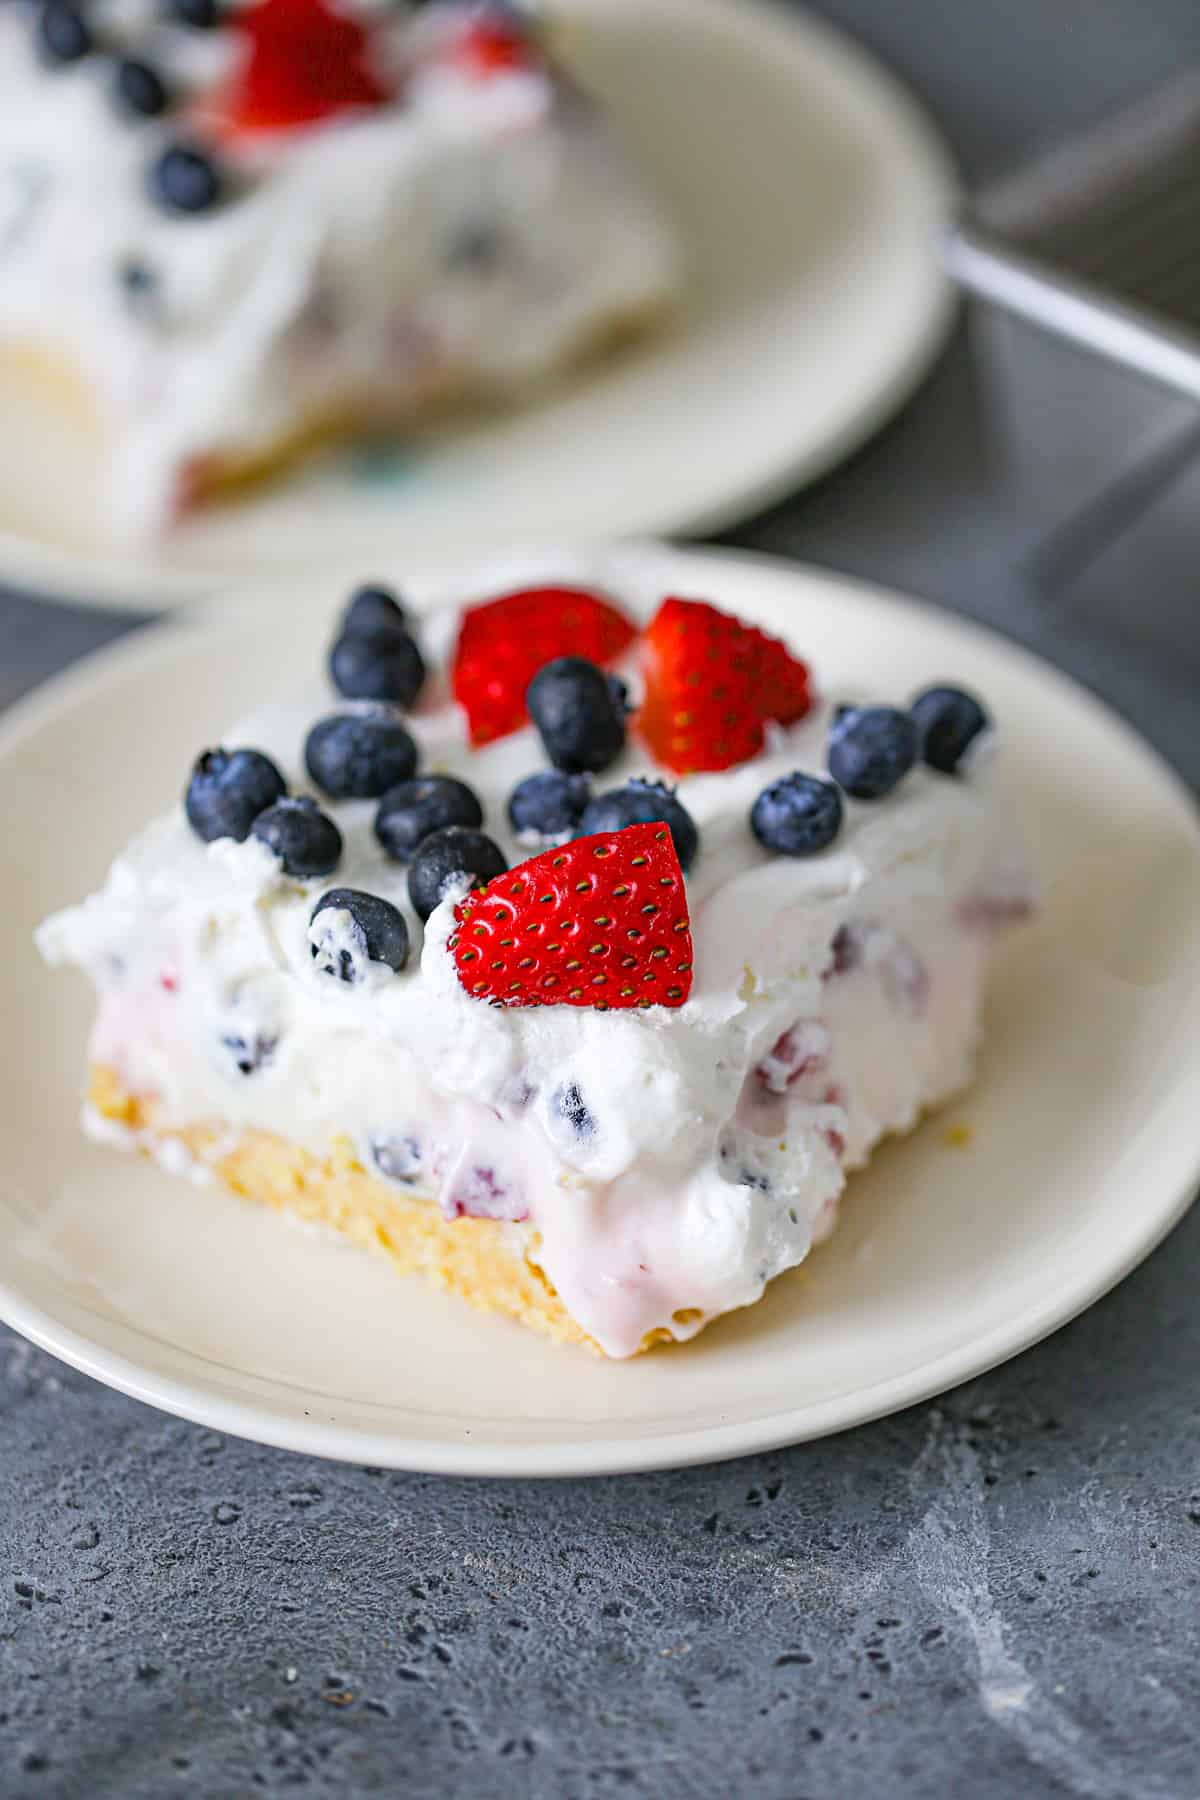 Easy No-Bake Berry Cheesecake Delight Dessert